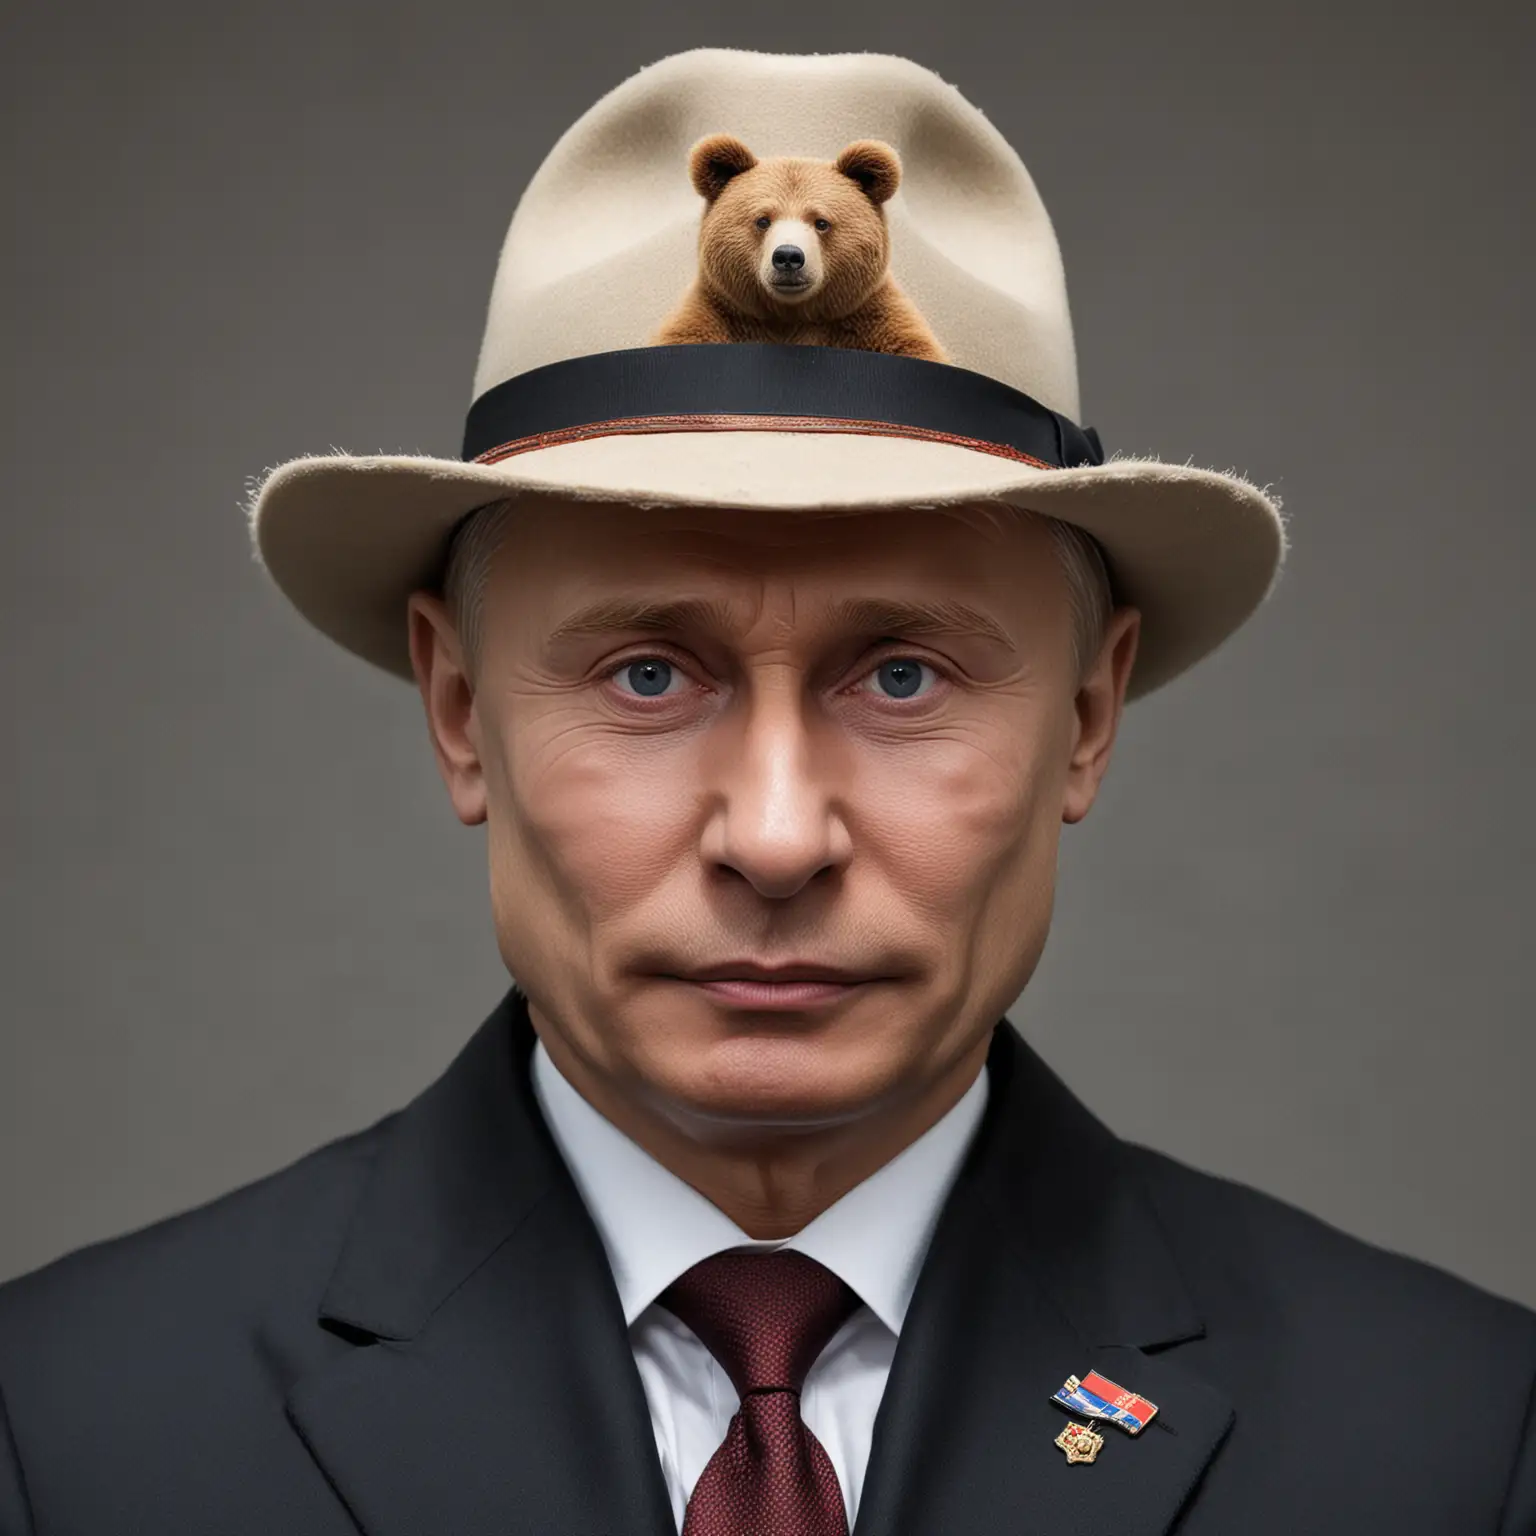 Russian-President-Putin-Wearing-Traditional-Fur-Hat-with-Bear-Emblem